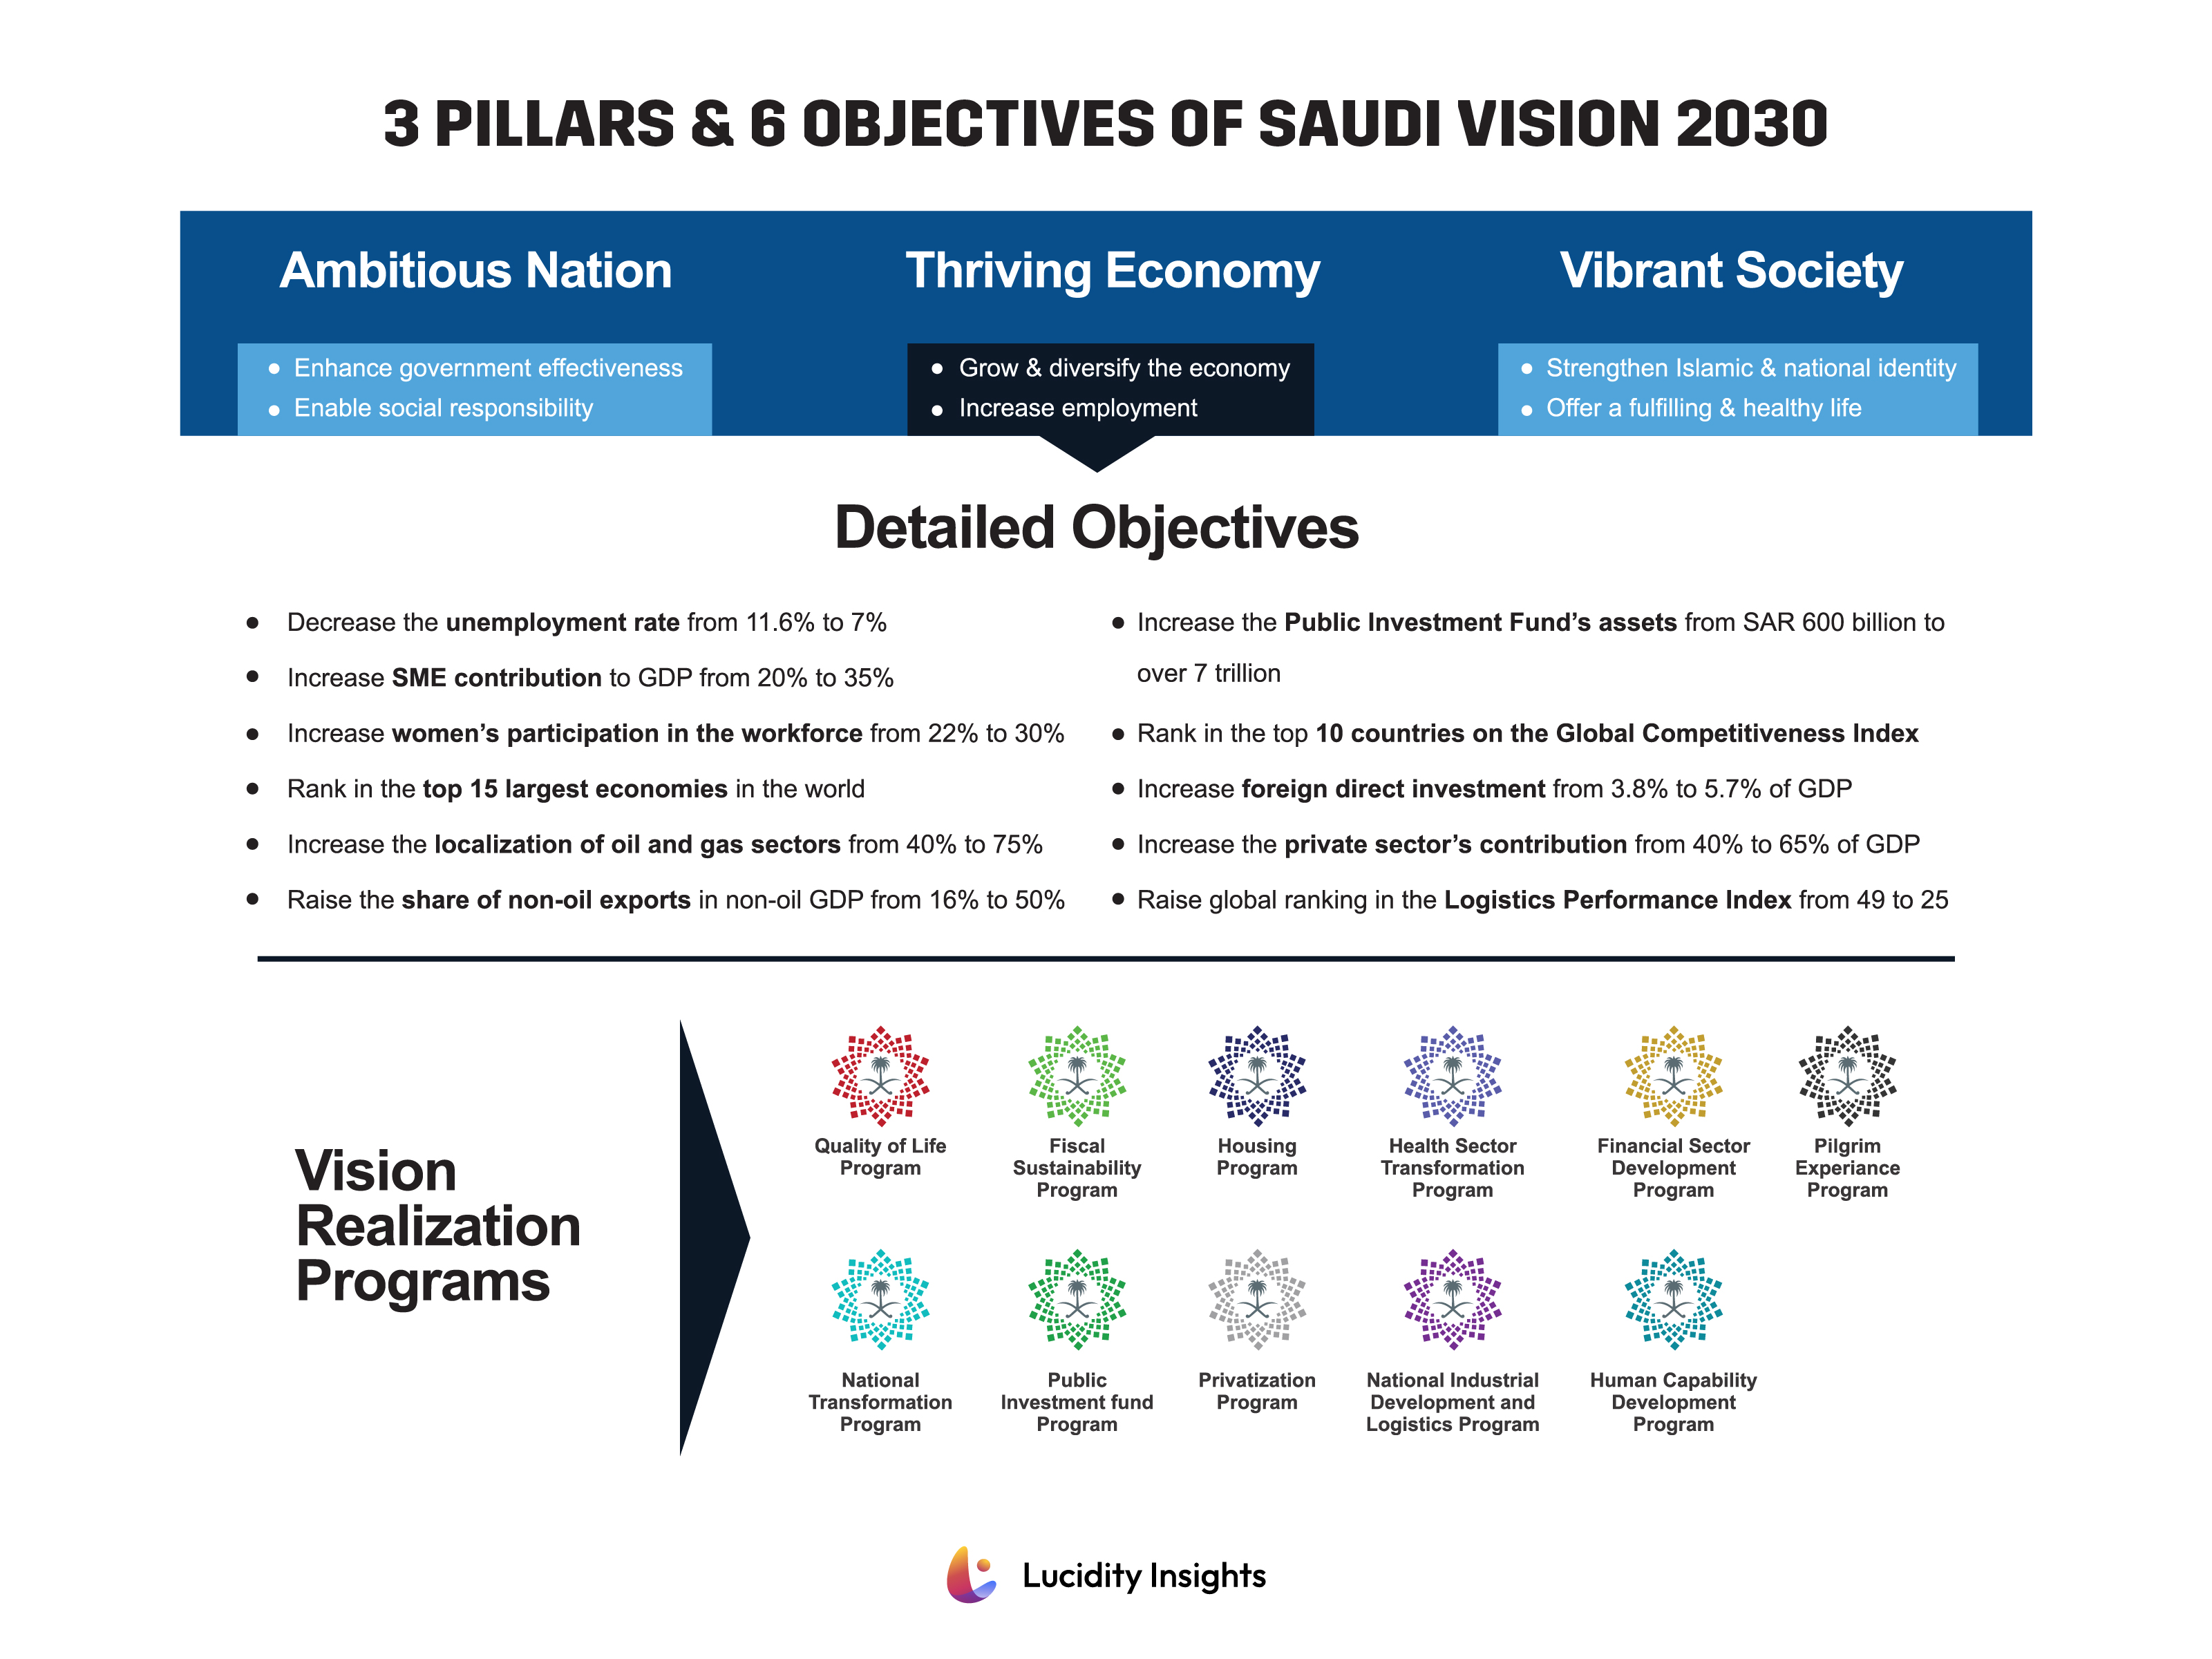 3 Pillars and 6 Objectives of Saudi Vision 2030